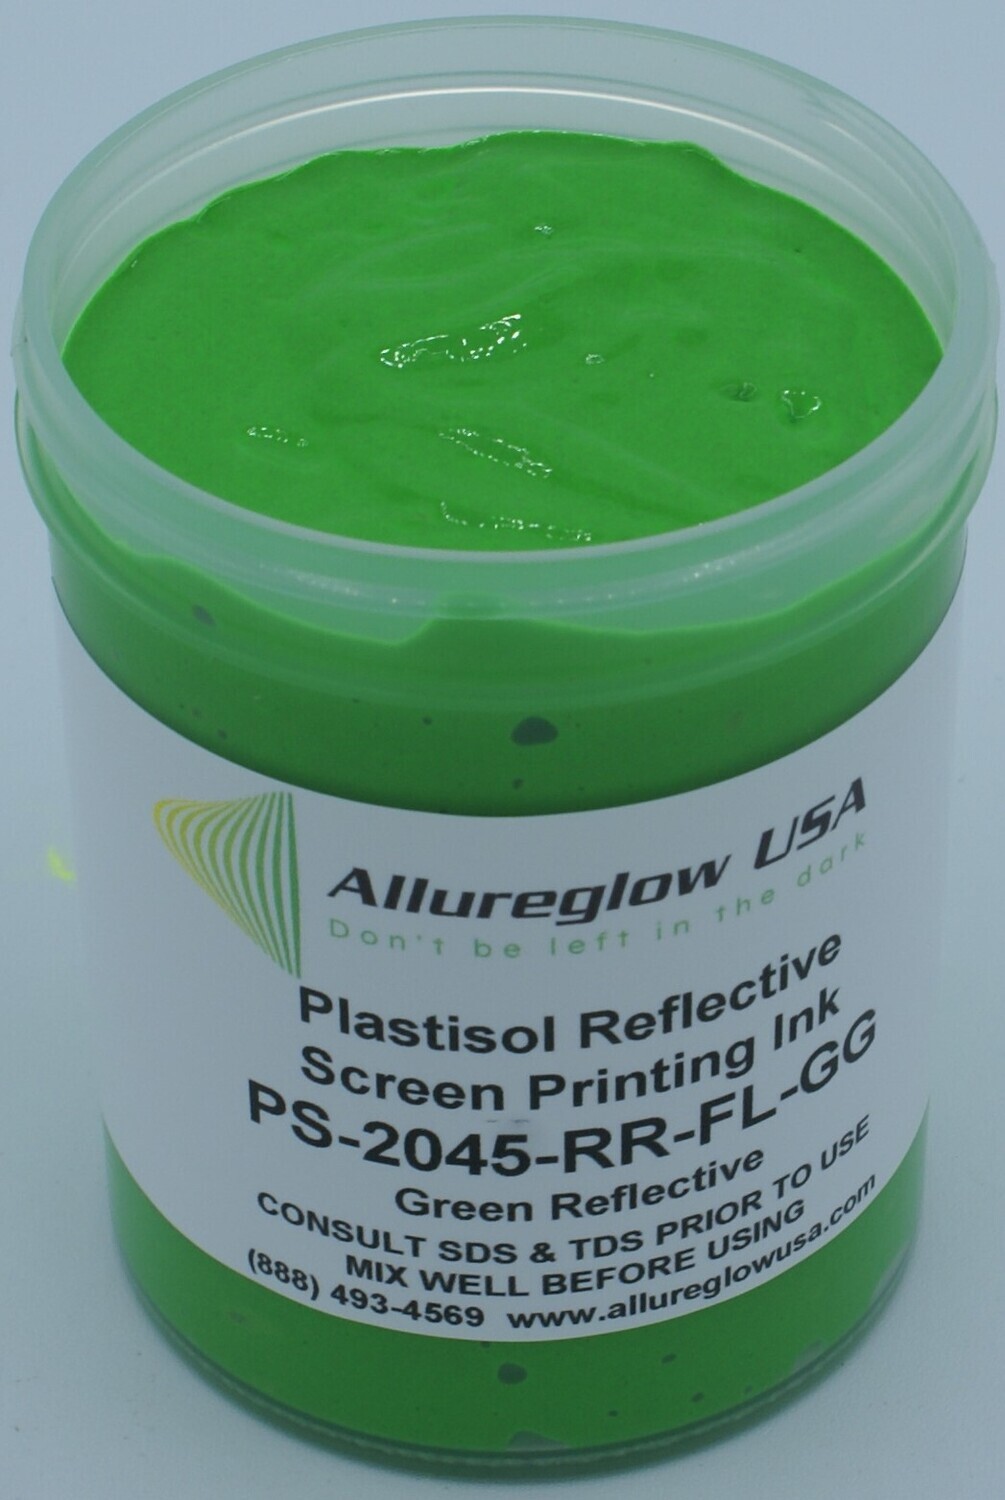 PS-2045-RR-FL-GG-FV   PLASTISOL FLUORESCENT GREEN REFLECTIVE INK 5 GALLON